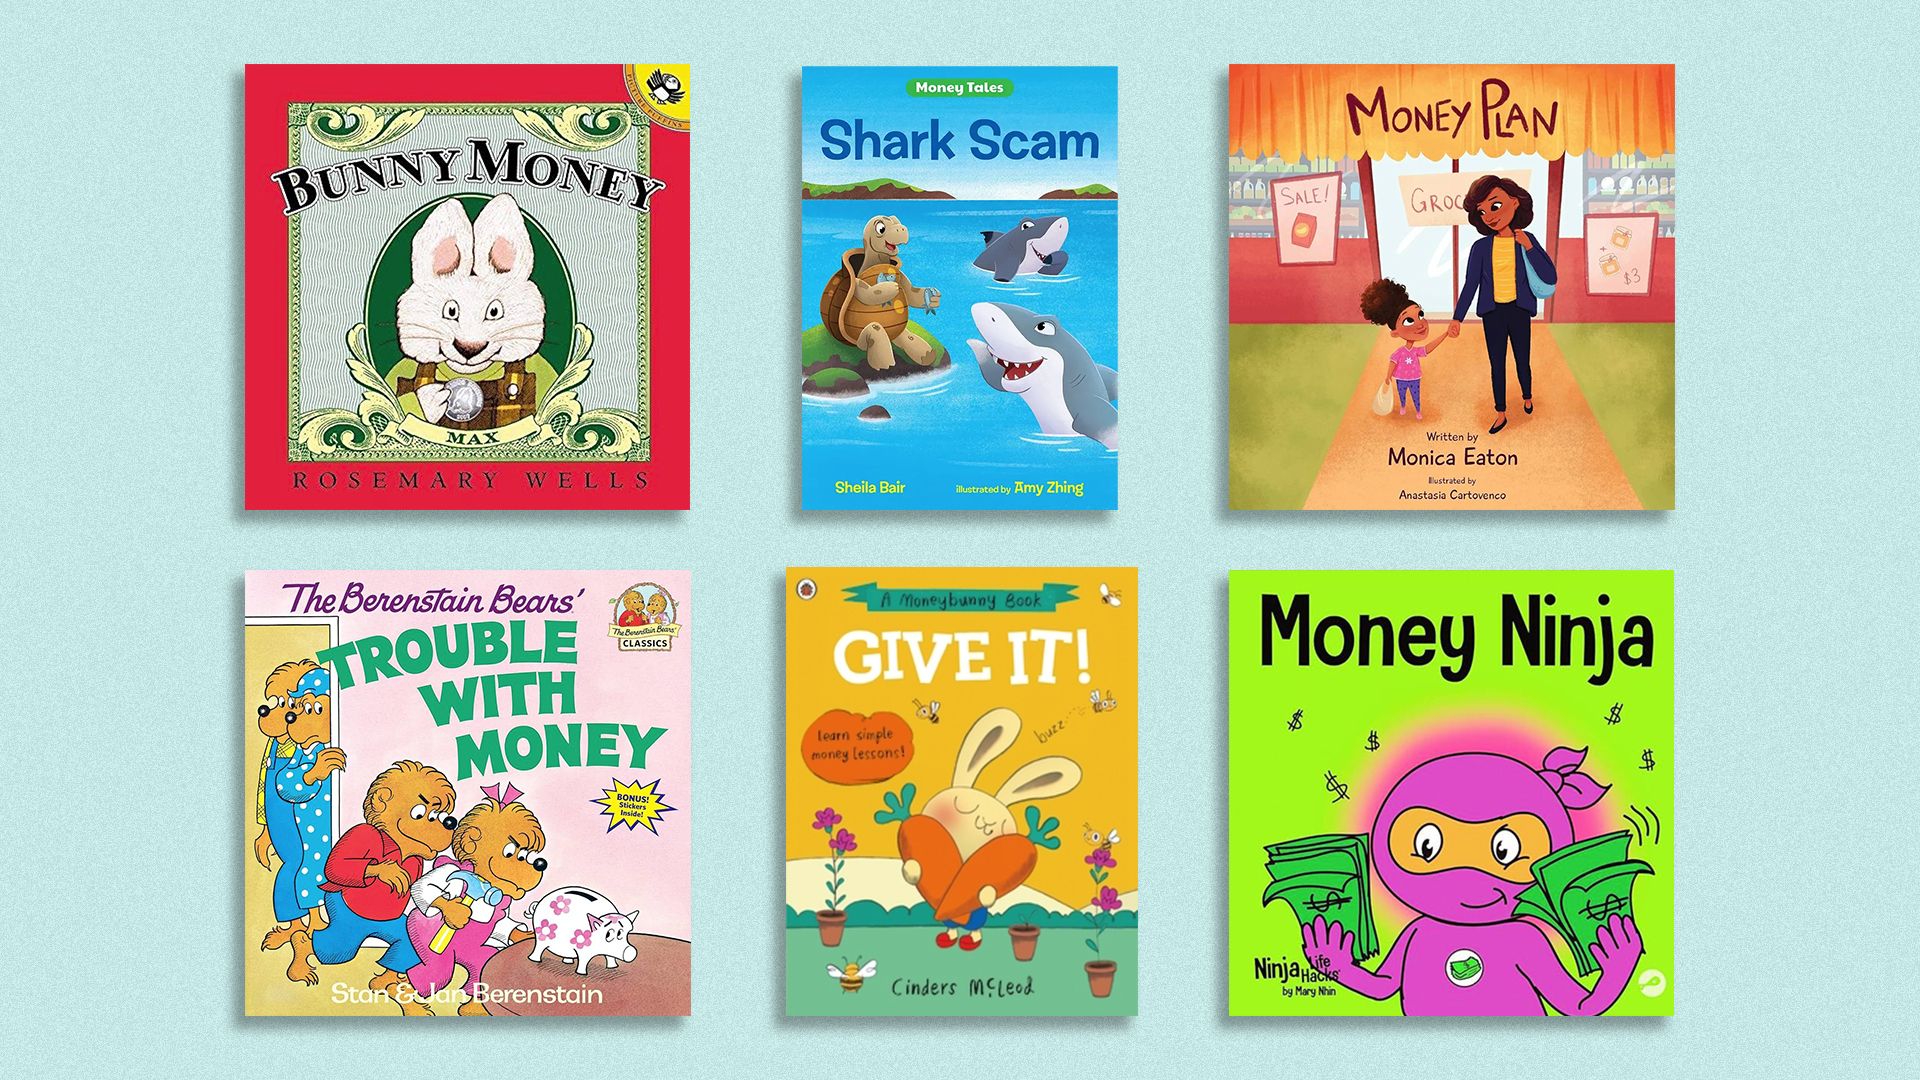 Children's money books: Bunny Money, Shark Scam, Money Plan, Trouble With Money, Give It!, Money Ninja